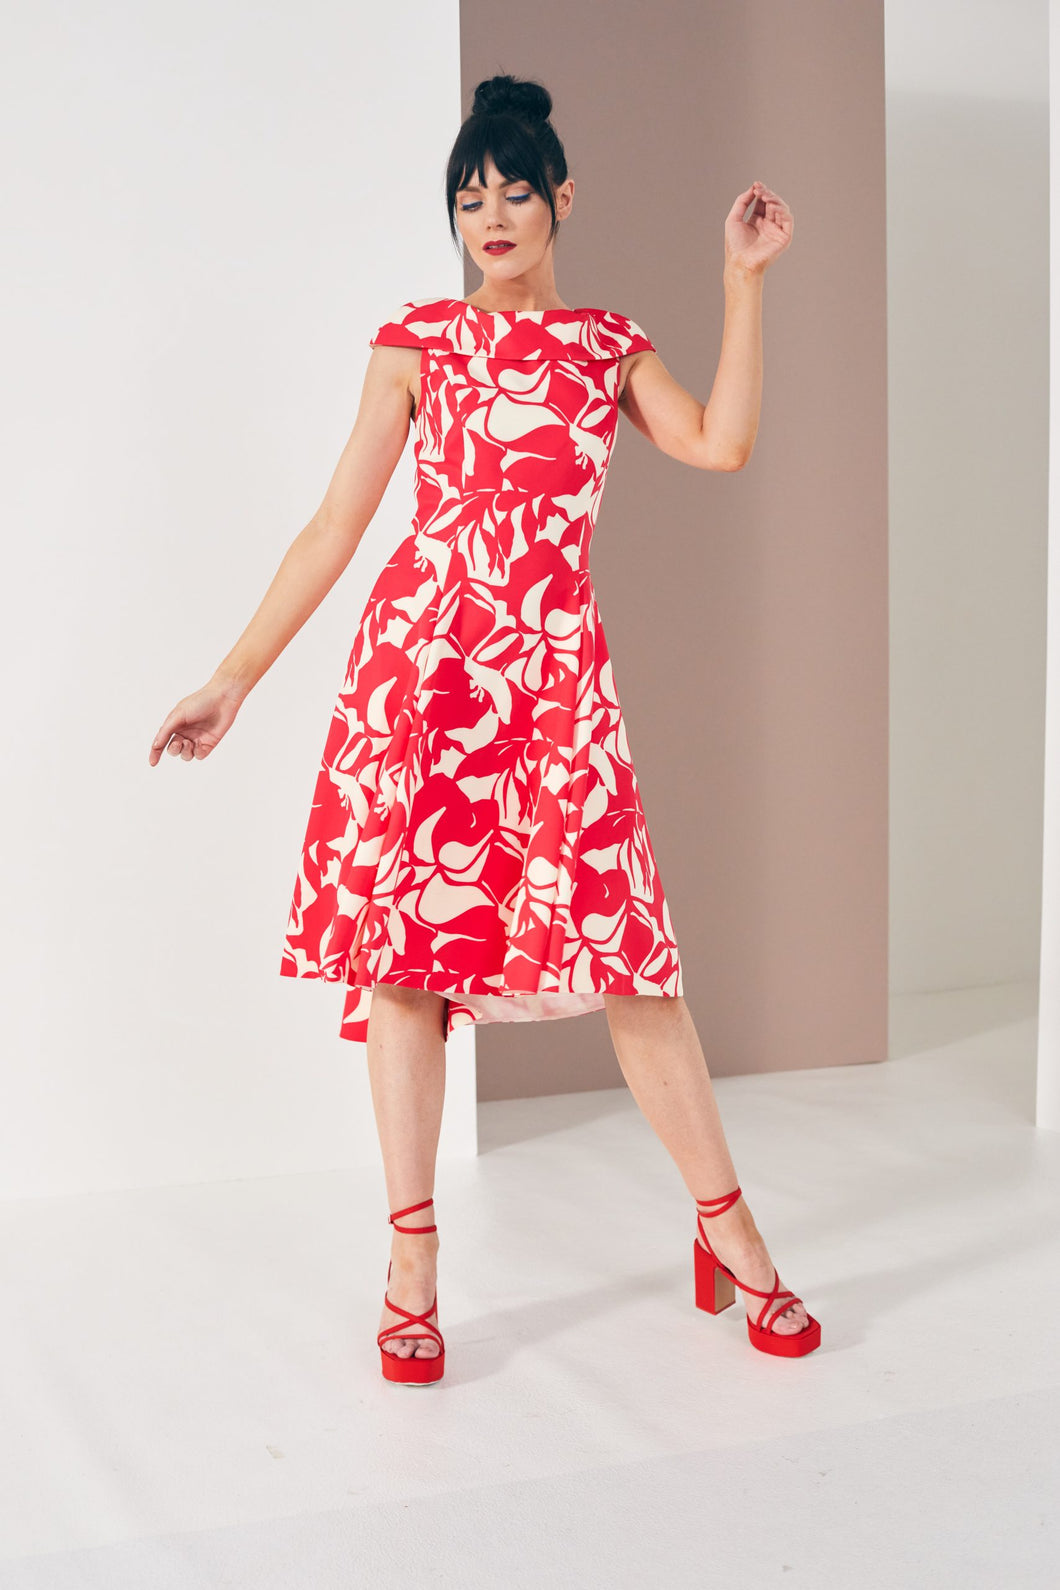 Kate Cooper - Red print dress